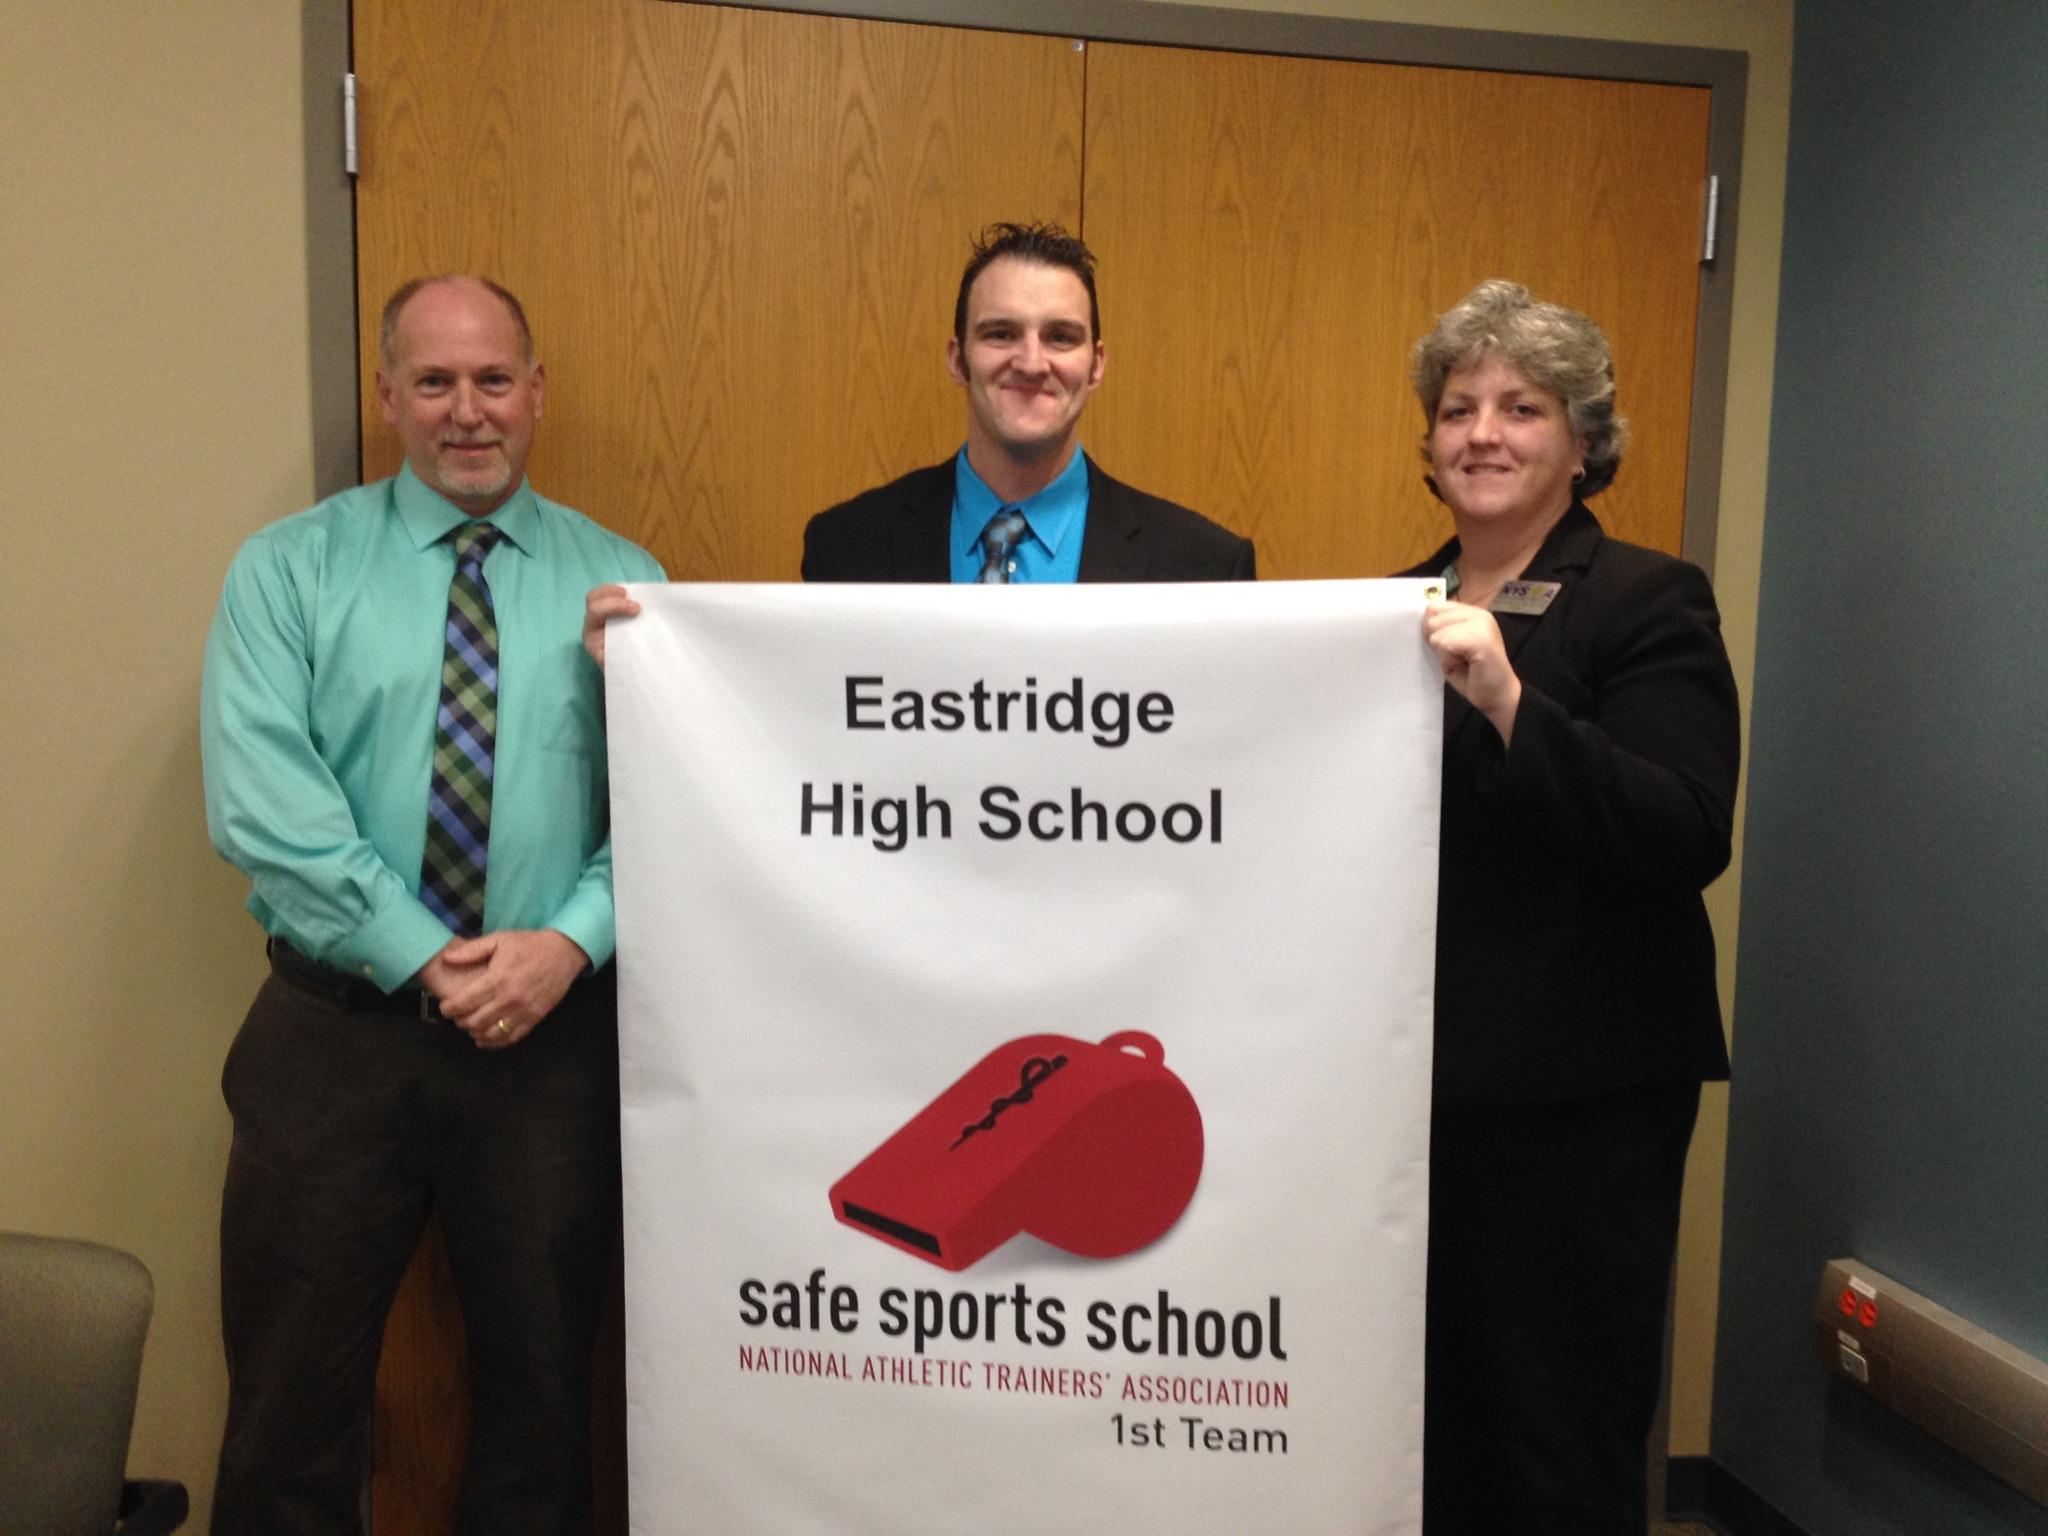 Eastridge High School Safe Sports School Award